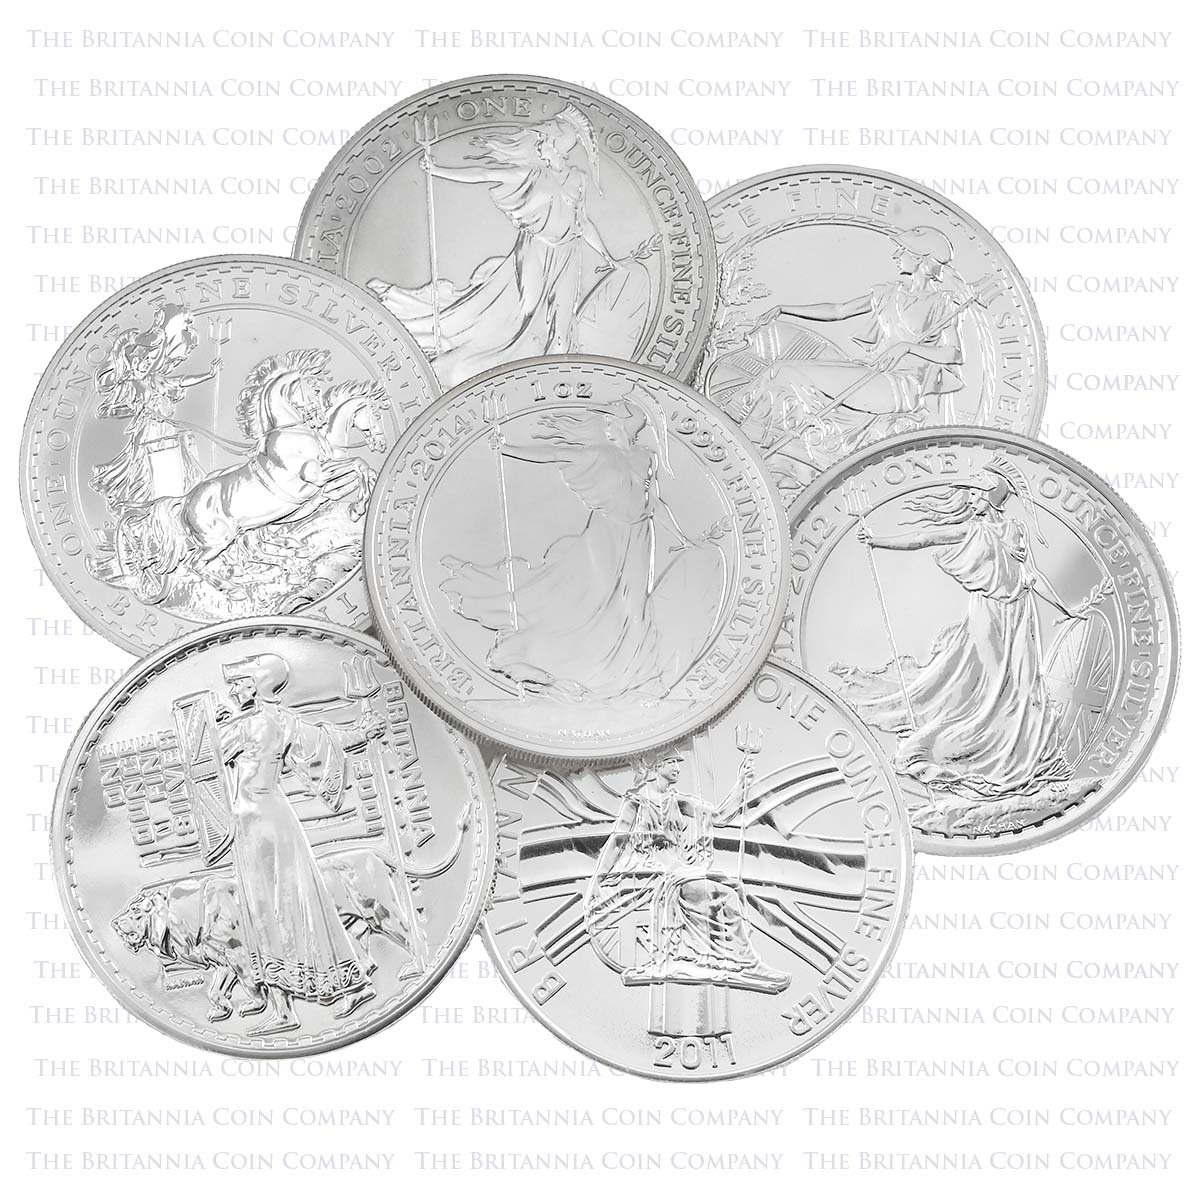 1oz Silver Britannias (Choose Your Date) Coins